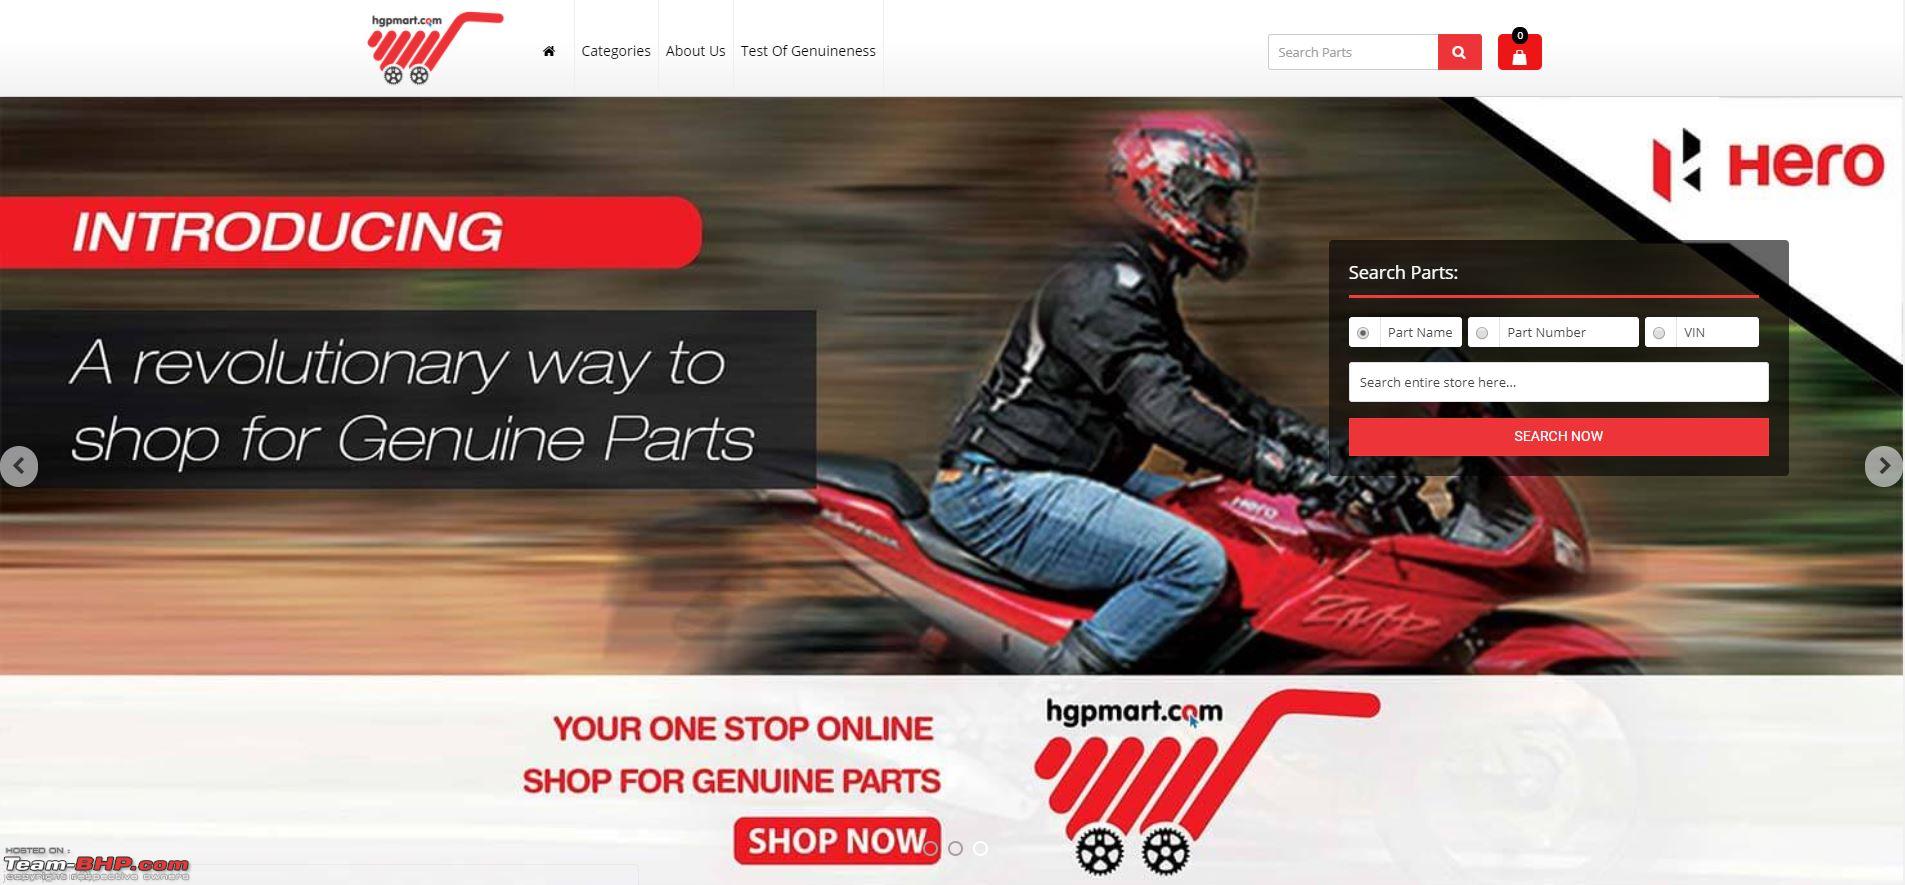 hero motocorp website